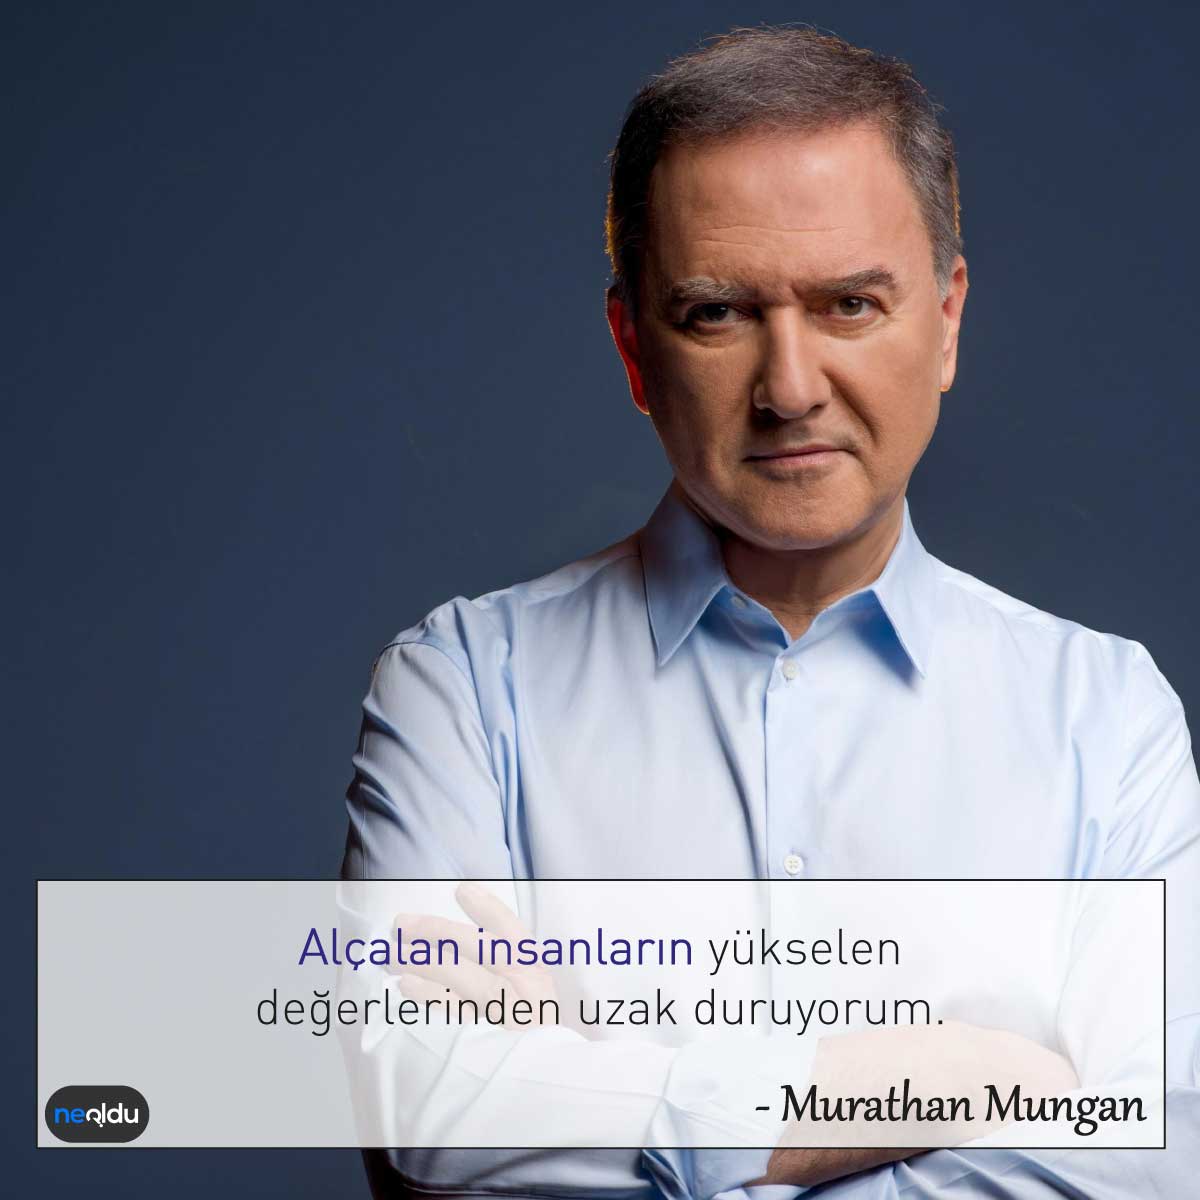 Murathan Mungan Sözleri